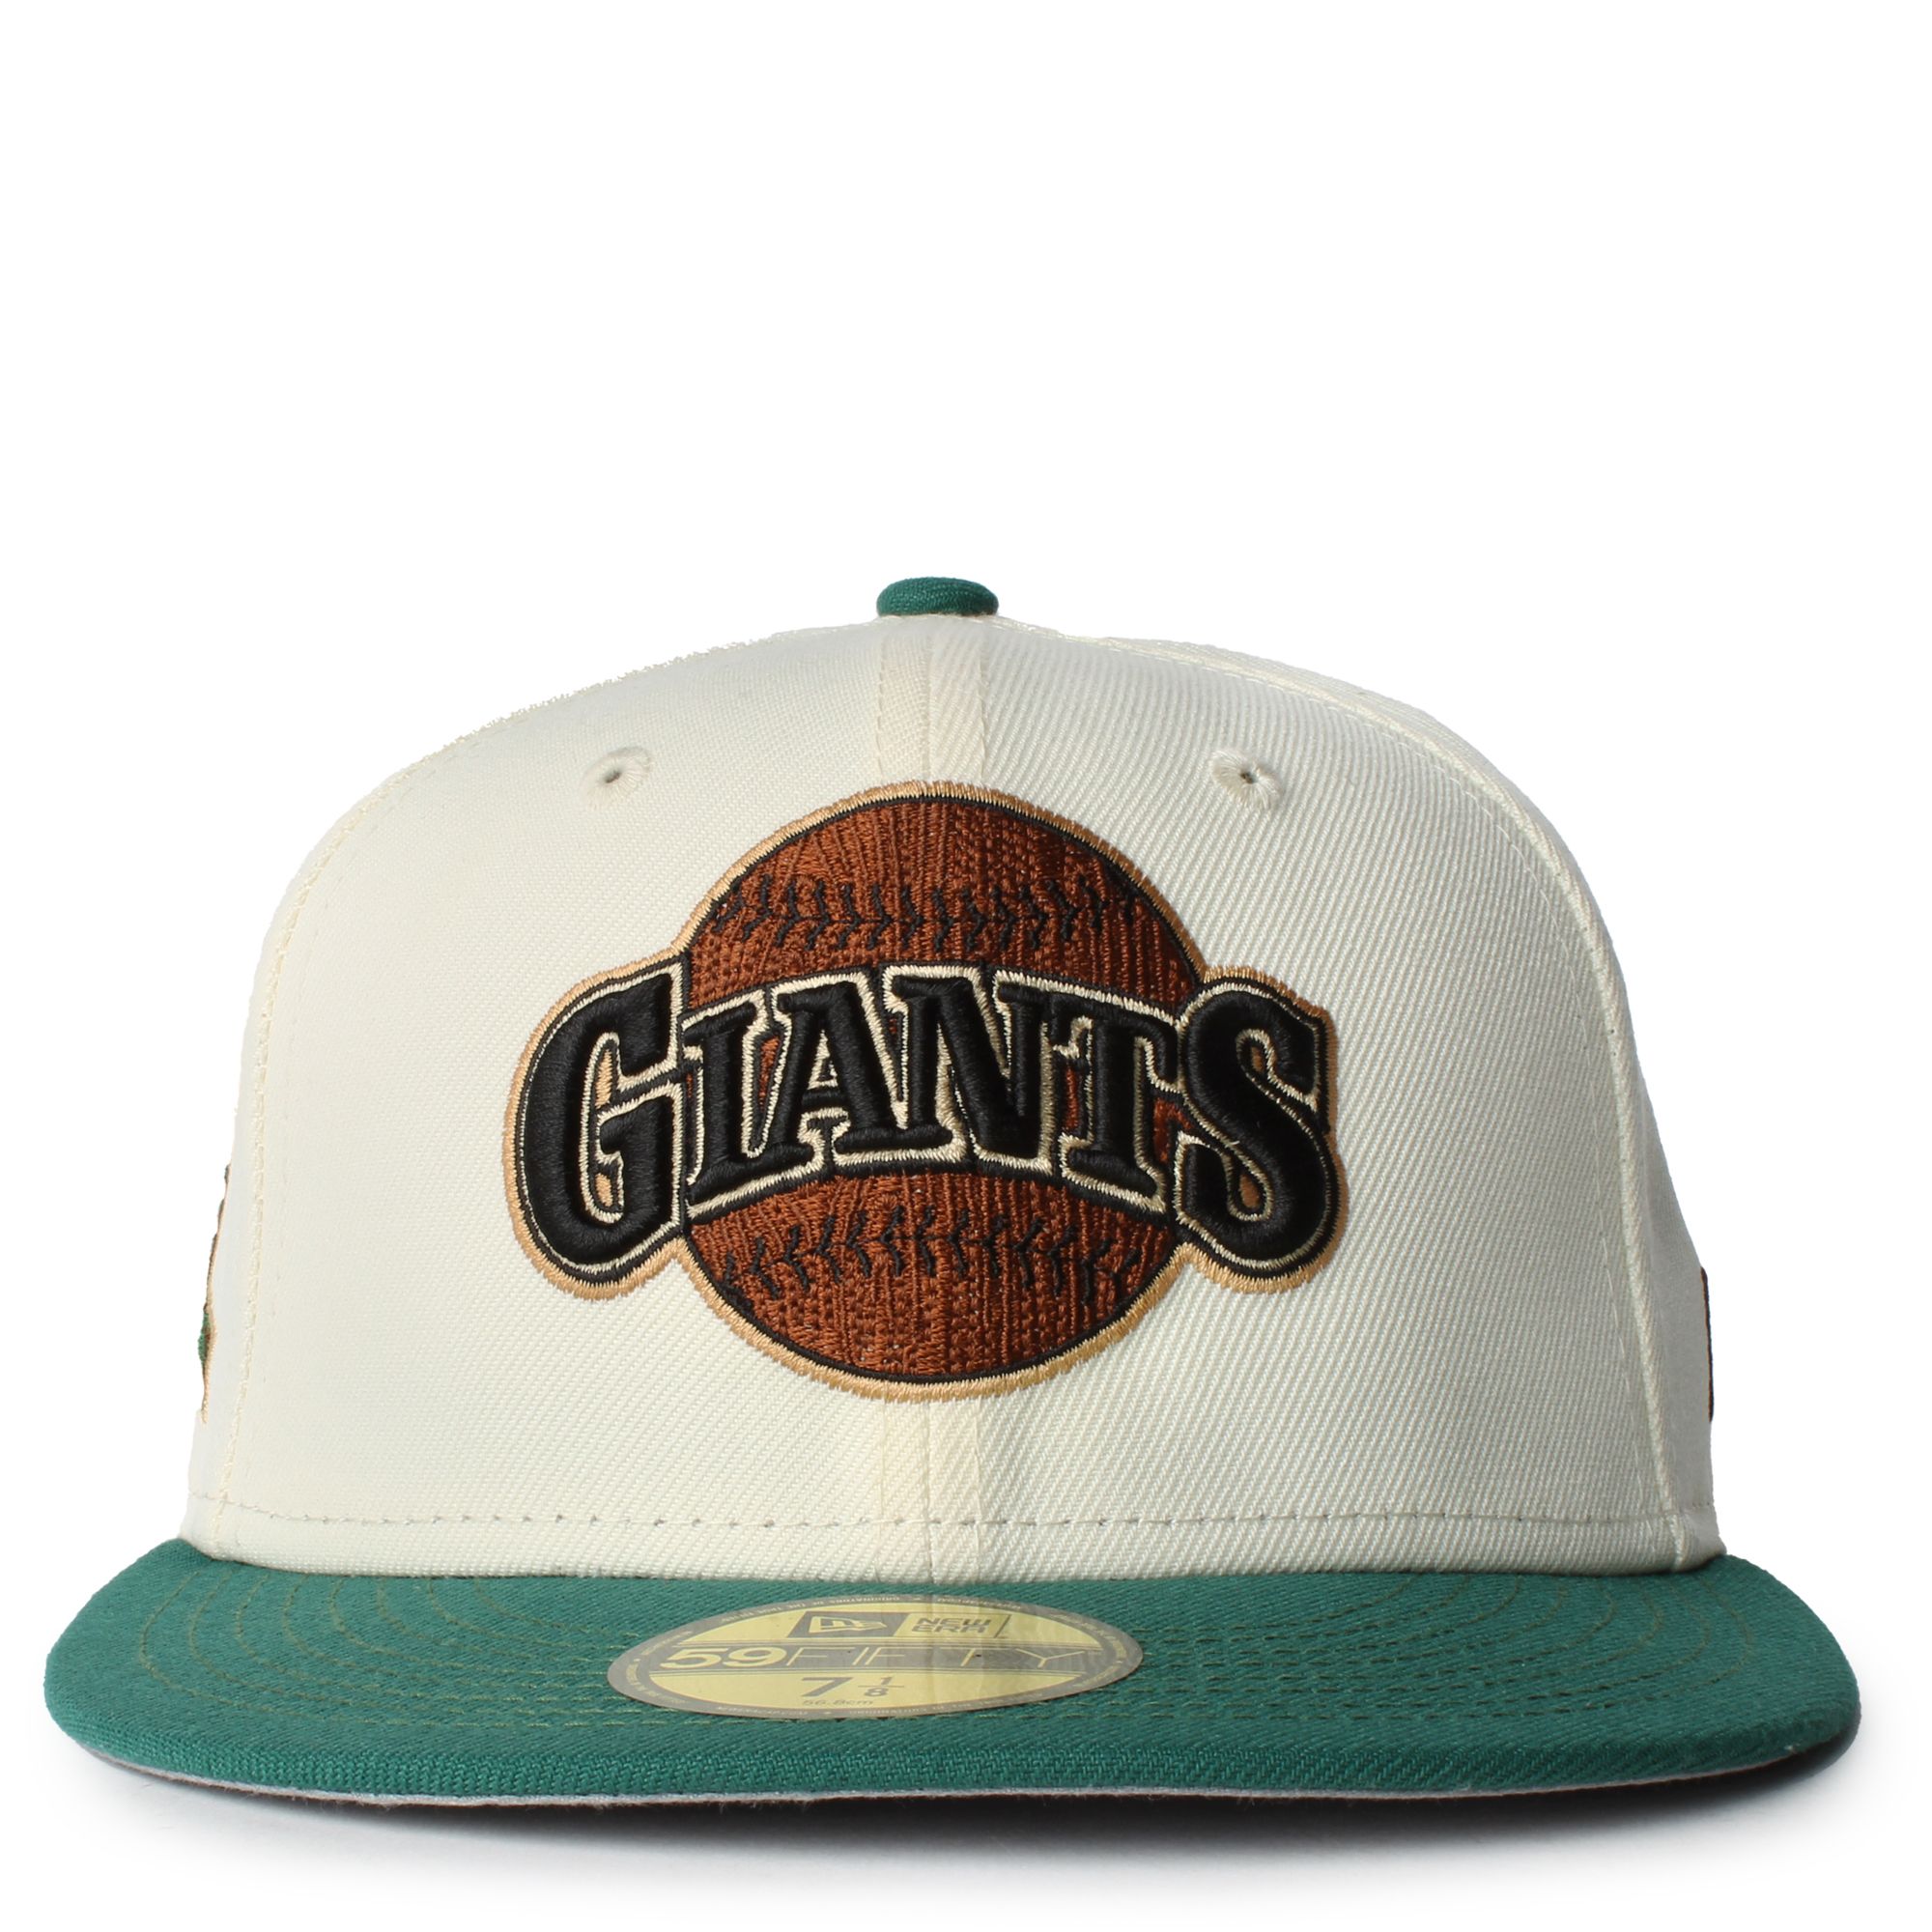 New Era Mens Giants Camp SP Cap - White/Green Size 7